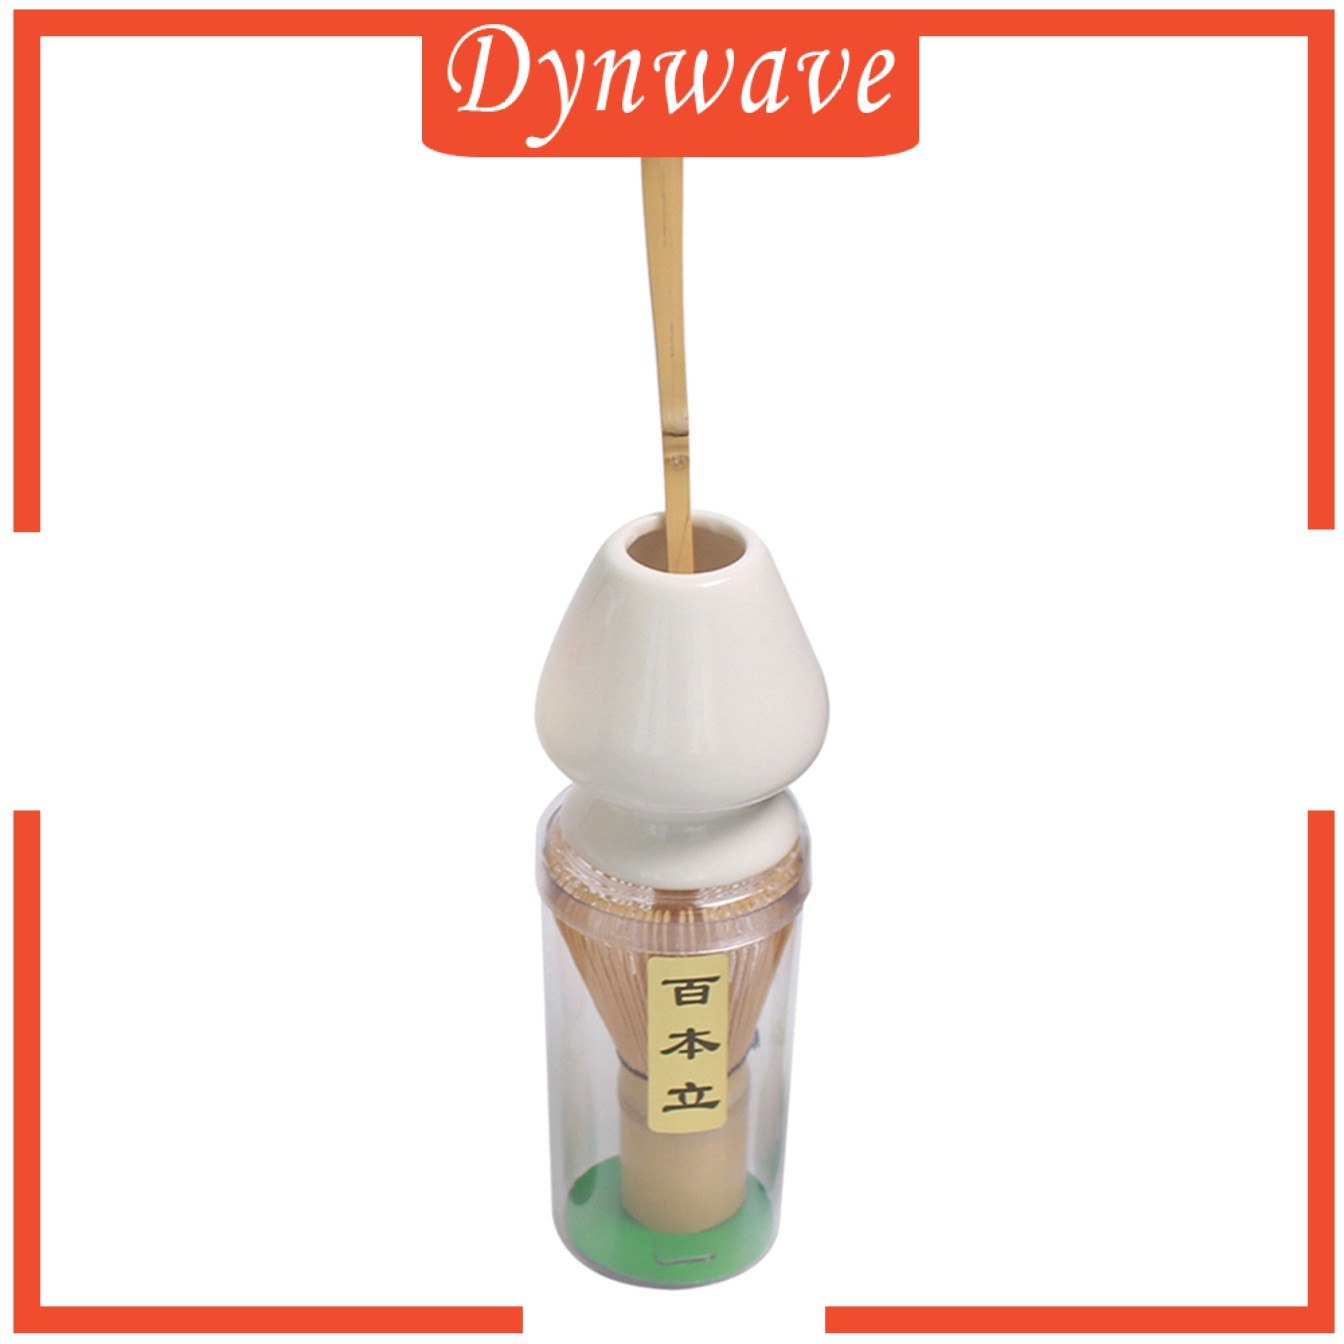 [DYNWAVE] Matcha Tea Whisk Set Bamboo Whisk+Bamboo Scoop+Ceramic Whisk Holder